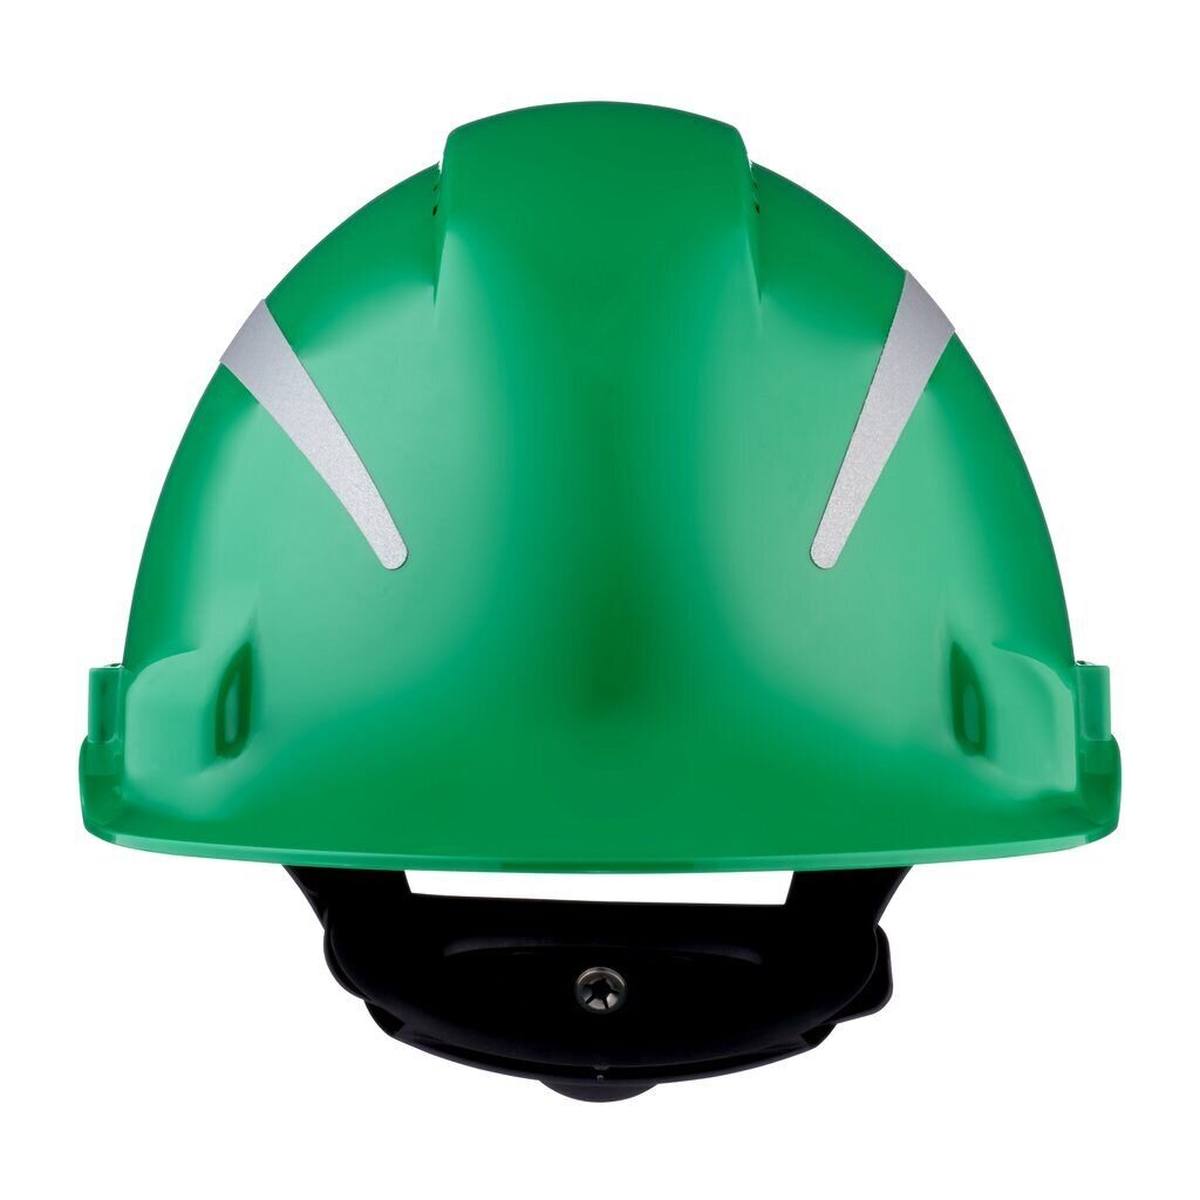 3M G3000 veiligheidshelm met UV-indicator, groen, ABS, geventileerde ratelsluiting, kunststof zweetband, reflecterende sticker